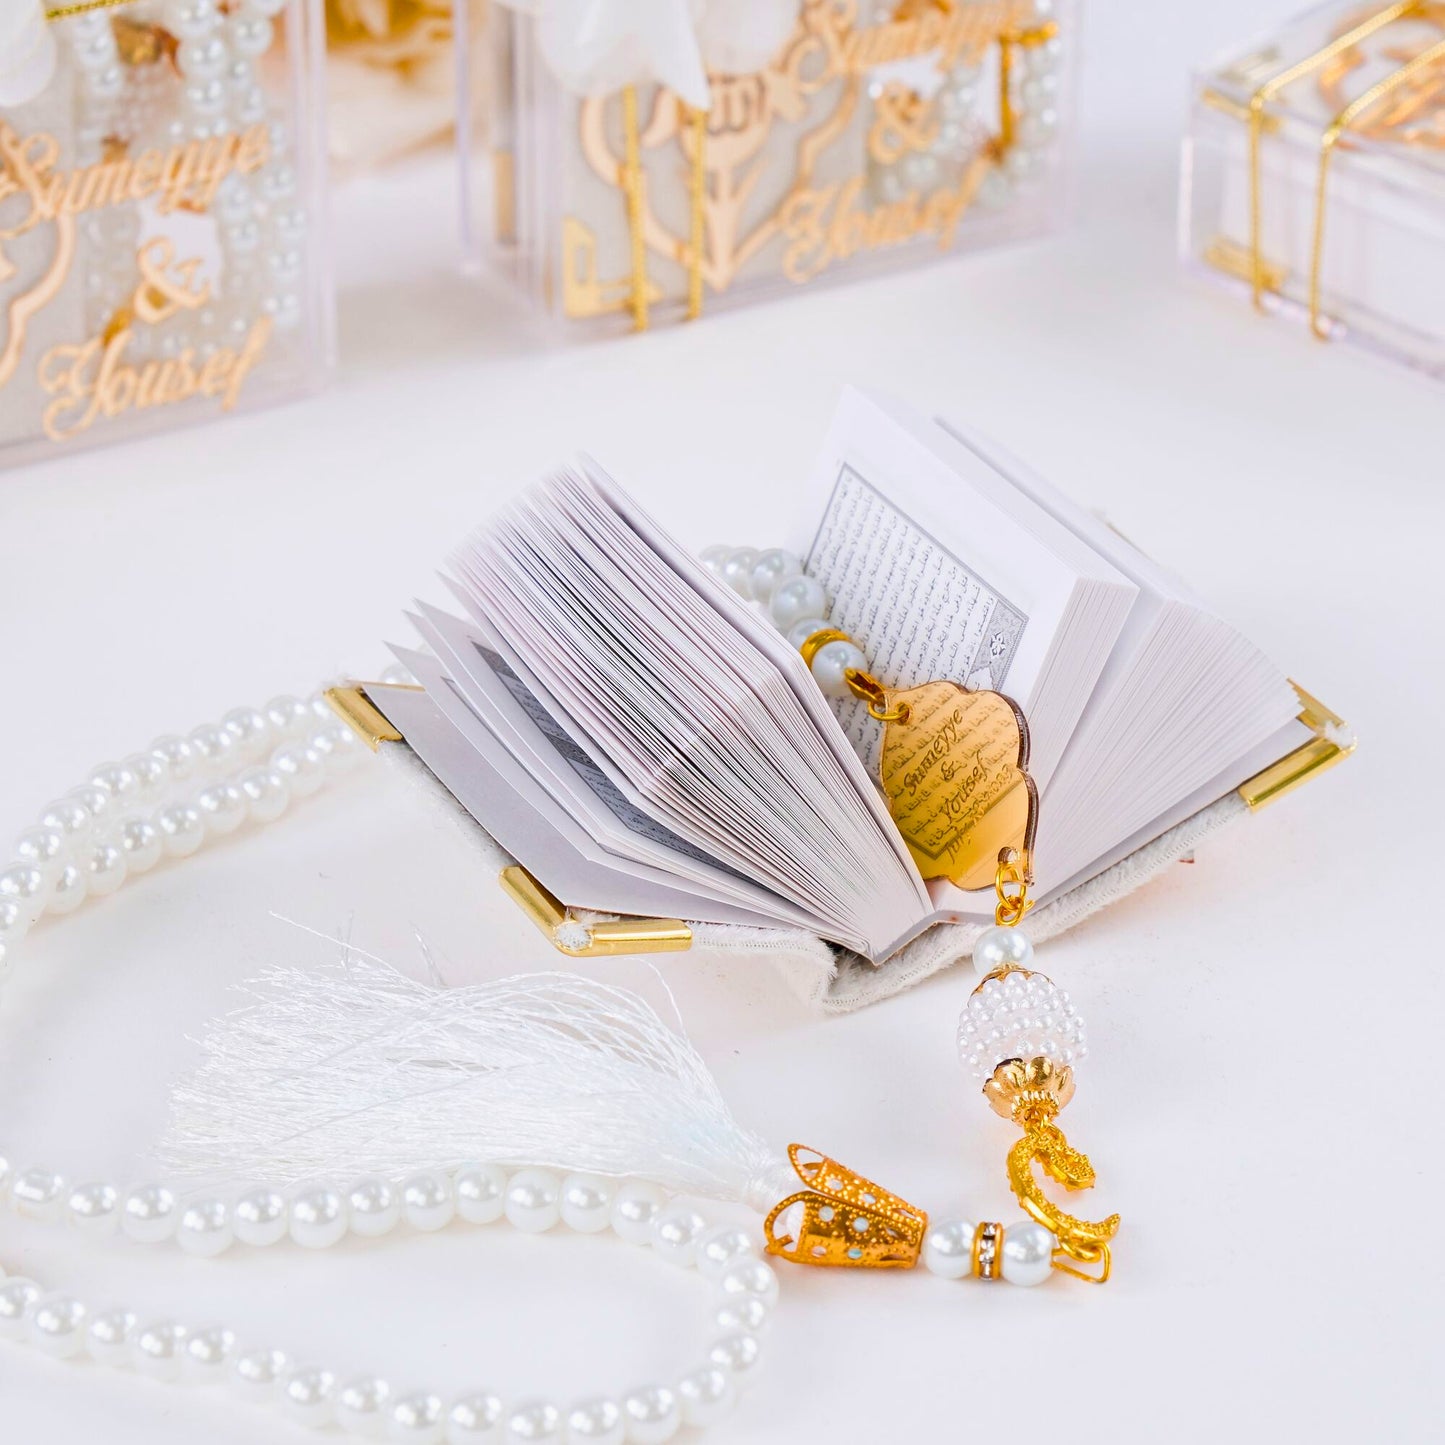 Personalized Velvet Mini Quran Pearl Tasbeeh Islam Muslim Gift Set